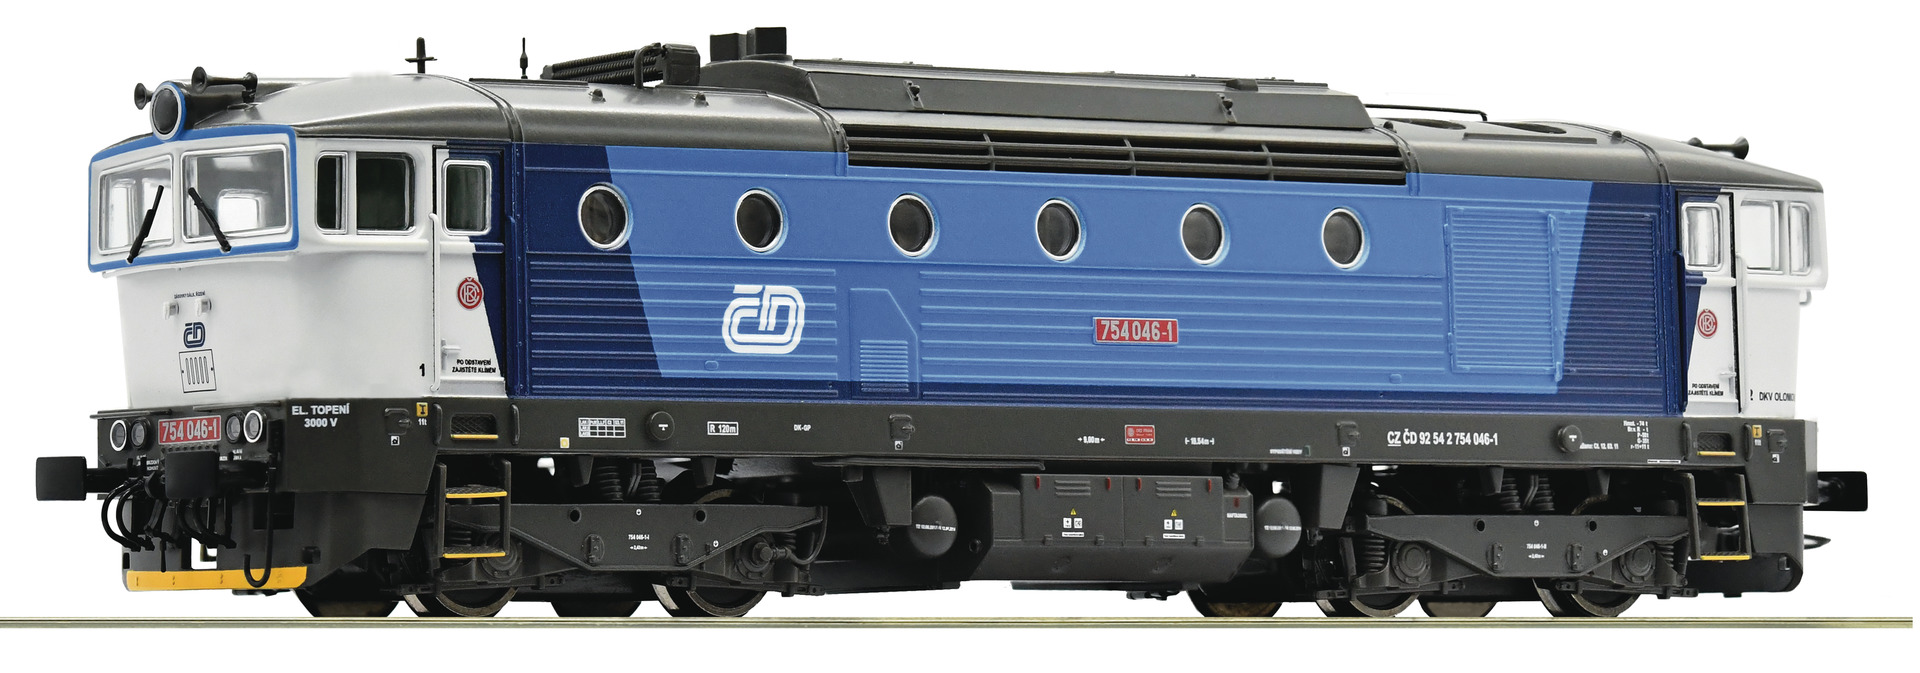 Roco 71023  Diesel locomotive class 754, CD